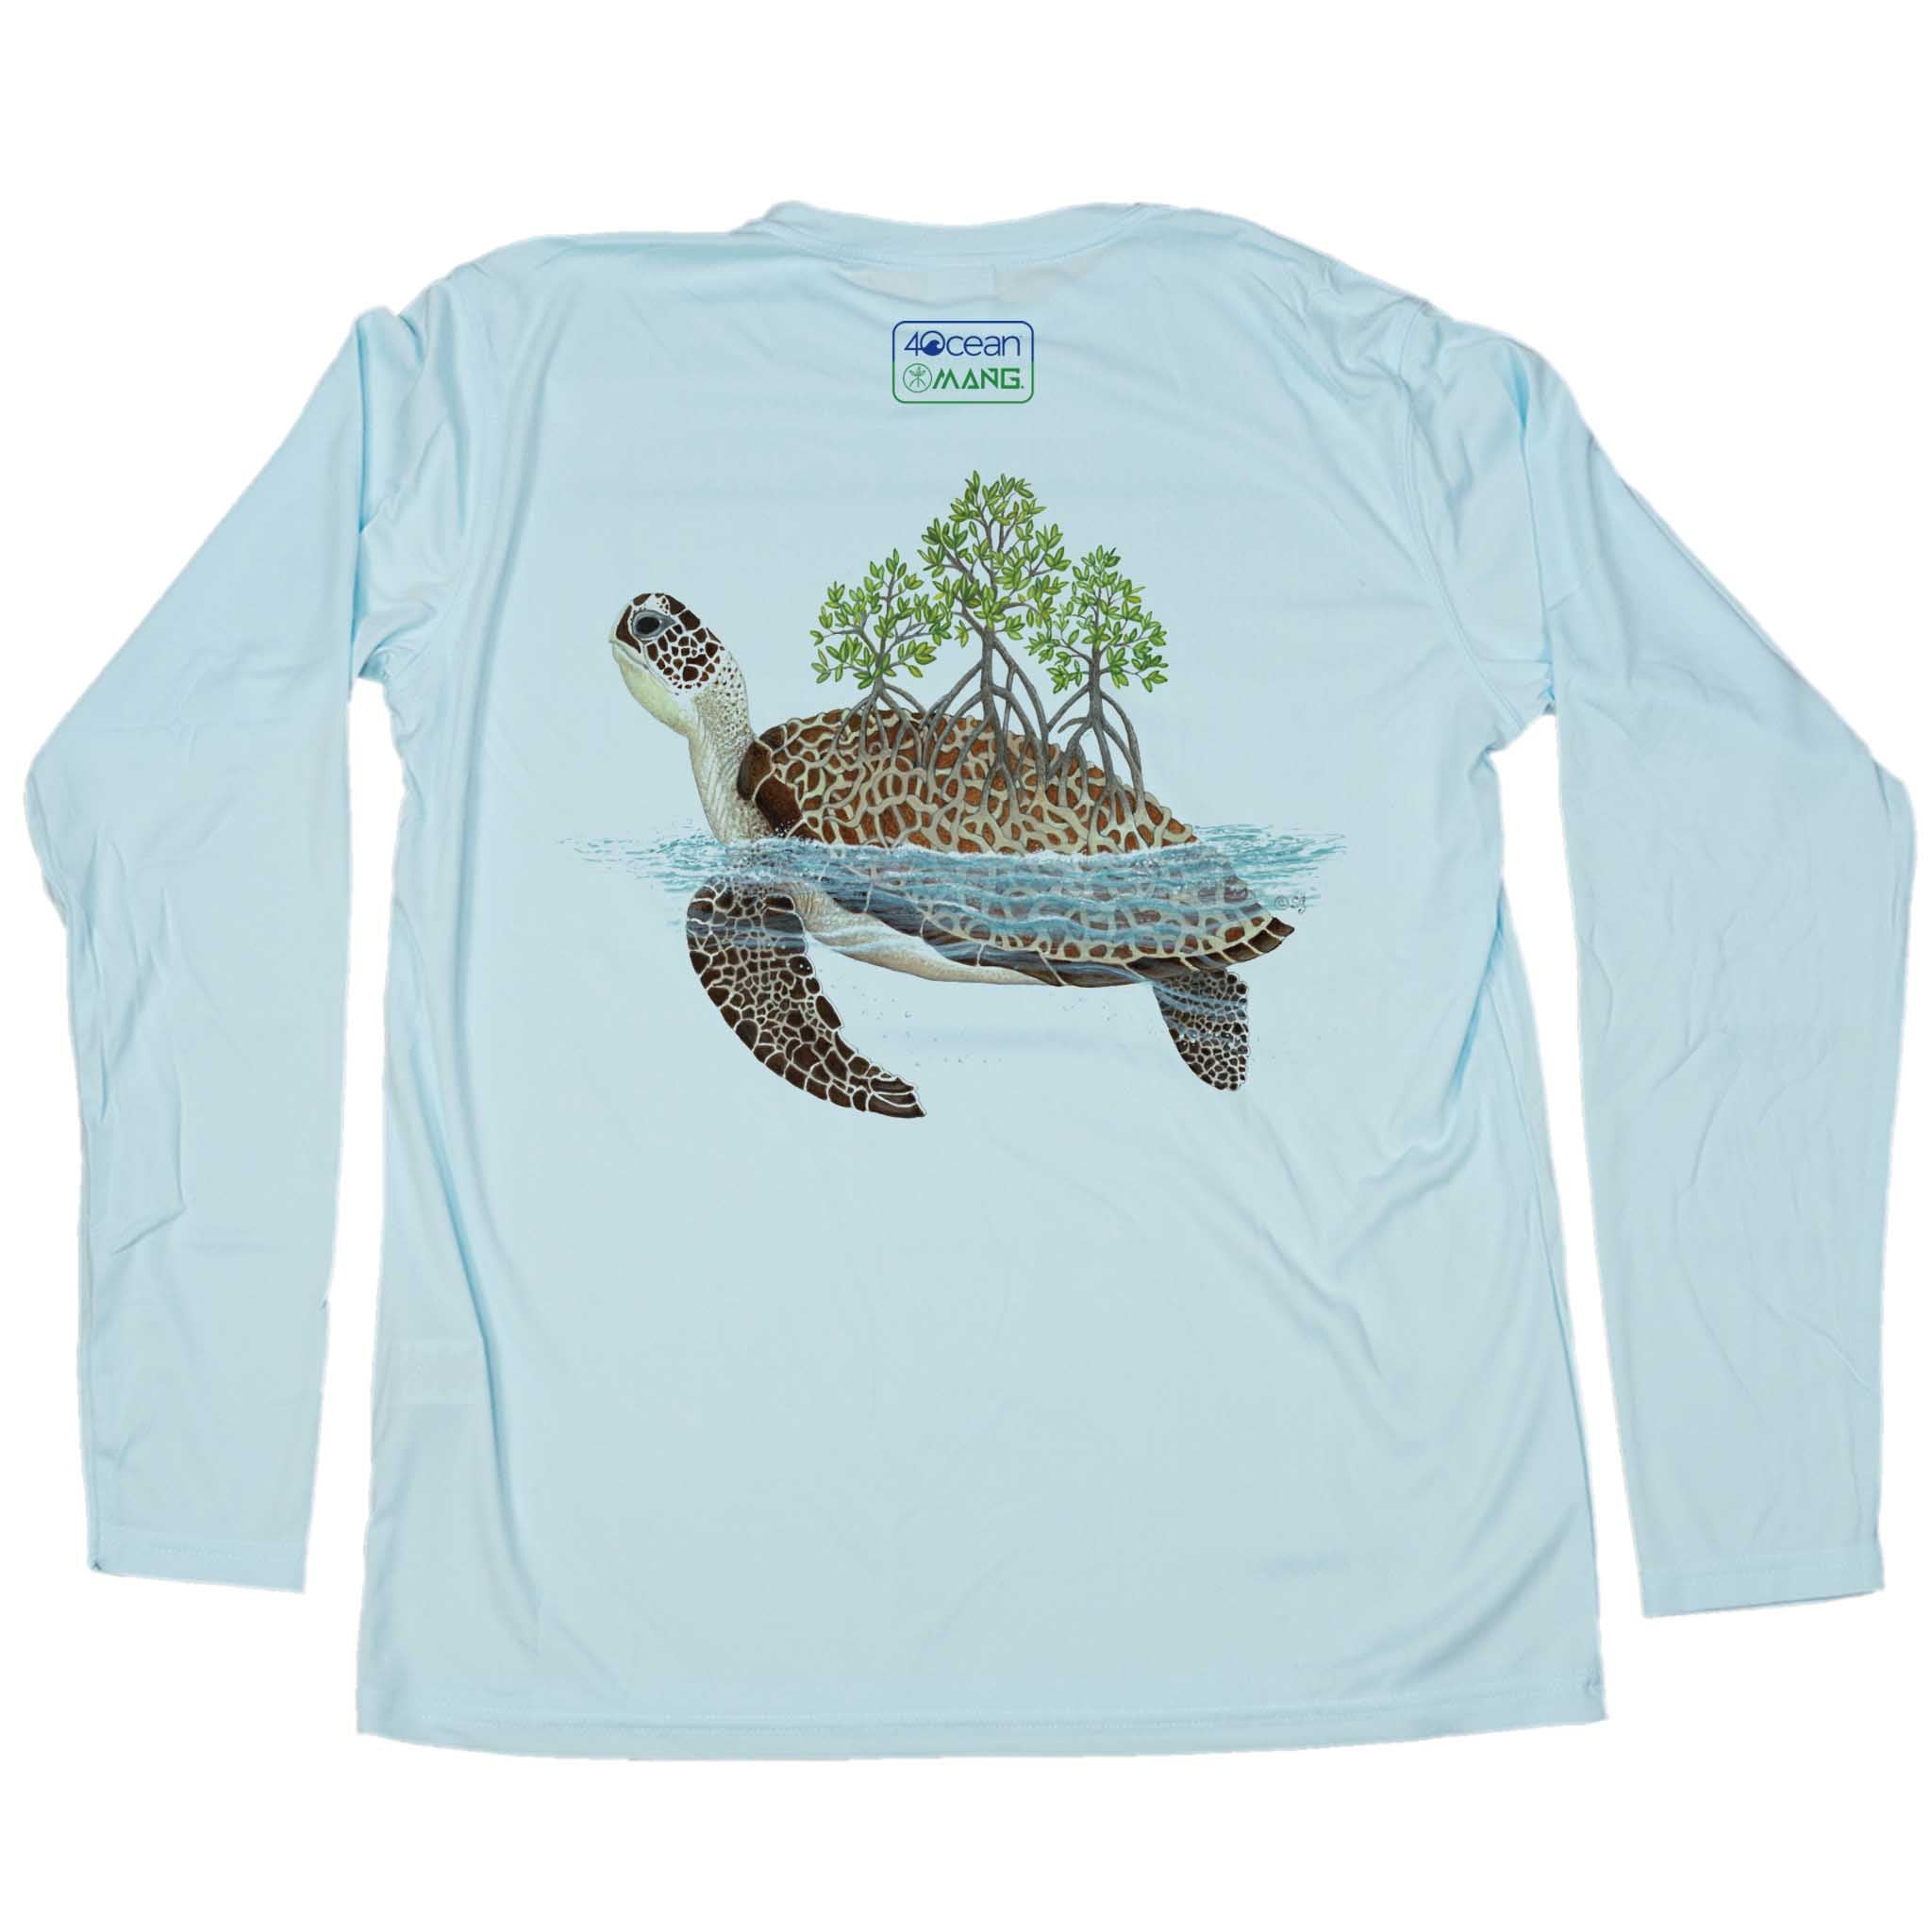 MANG 4ocean Turtle Eco LS - Men's - S-Arctic Blue